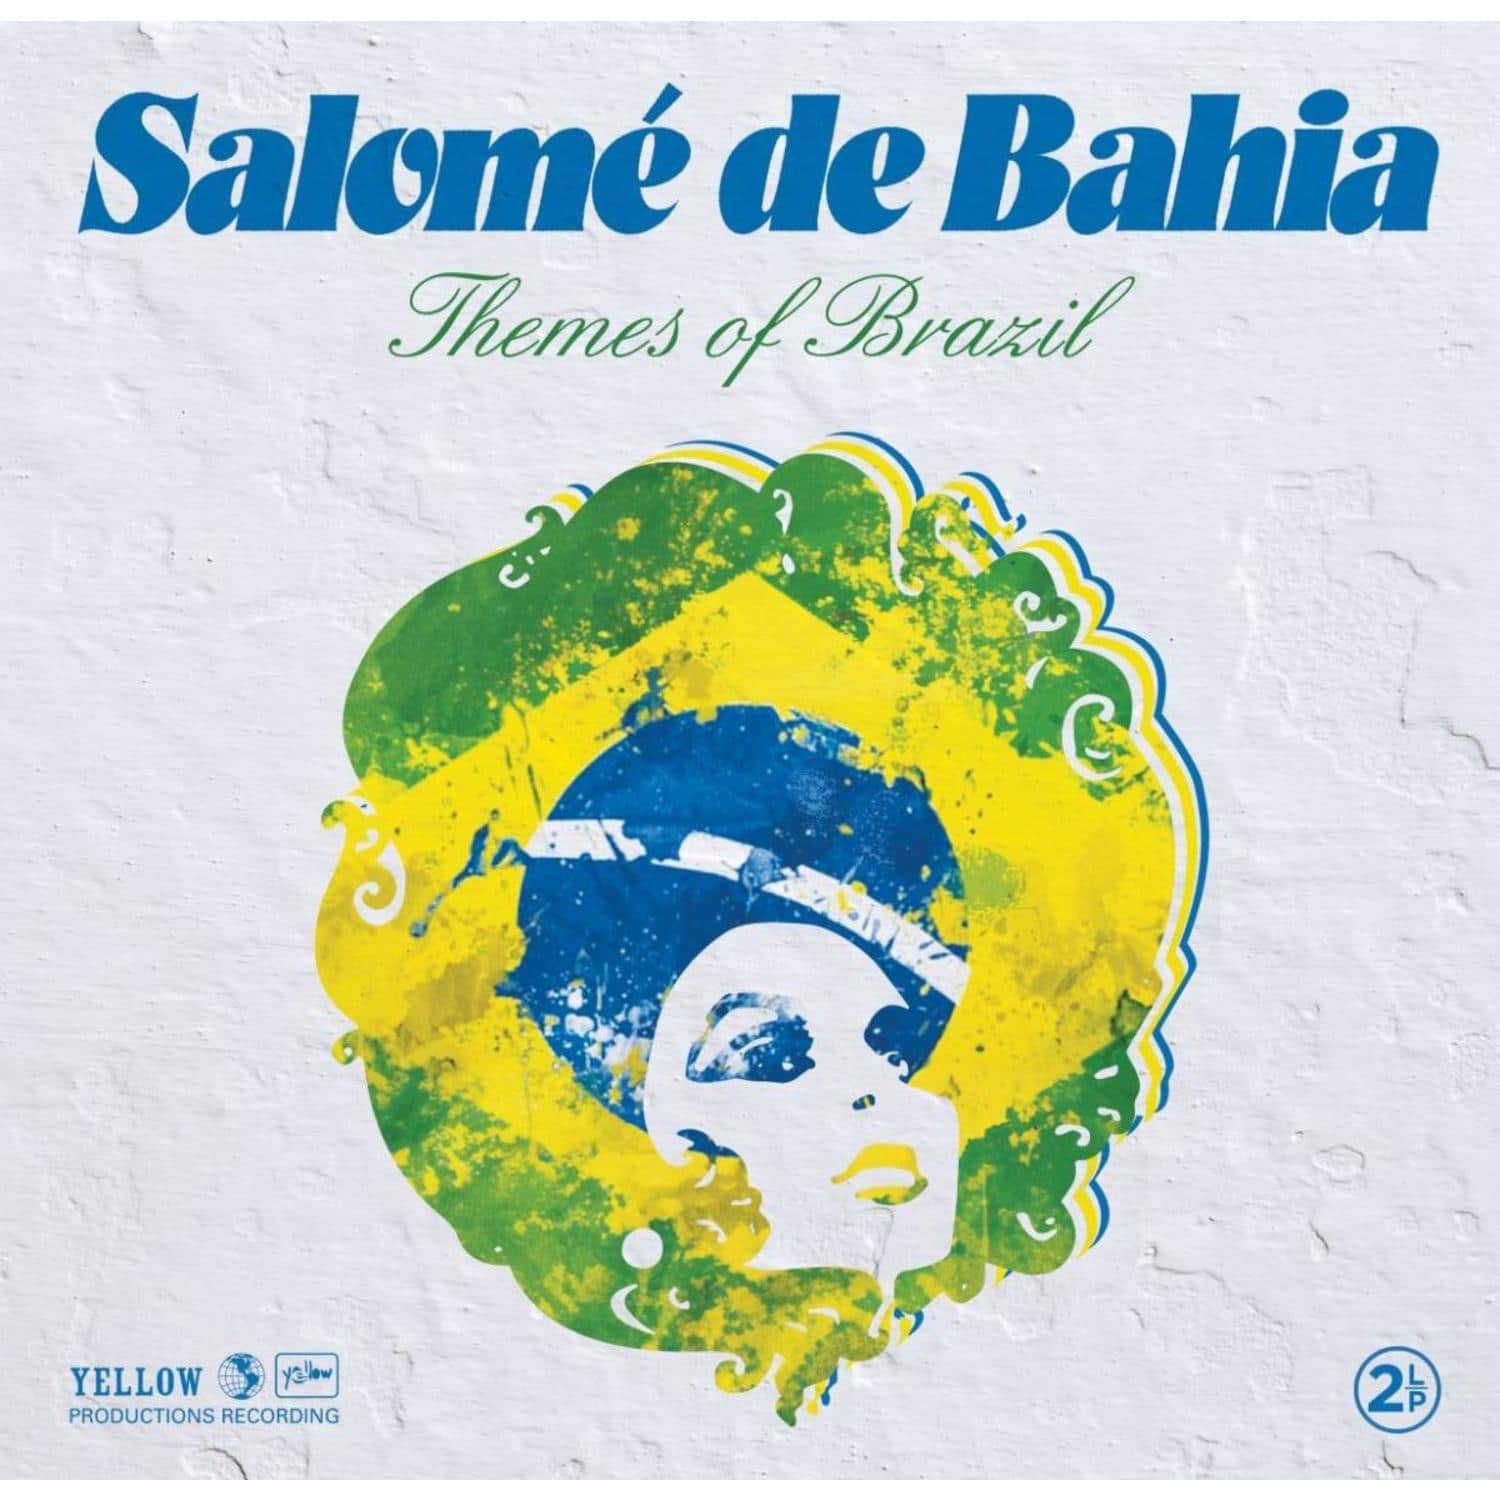 Salome de Bahia - THEMES OF BRAZIL 